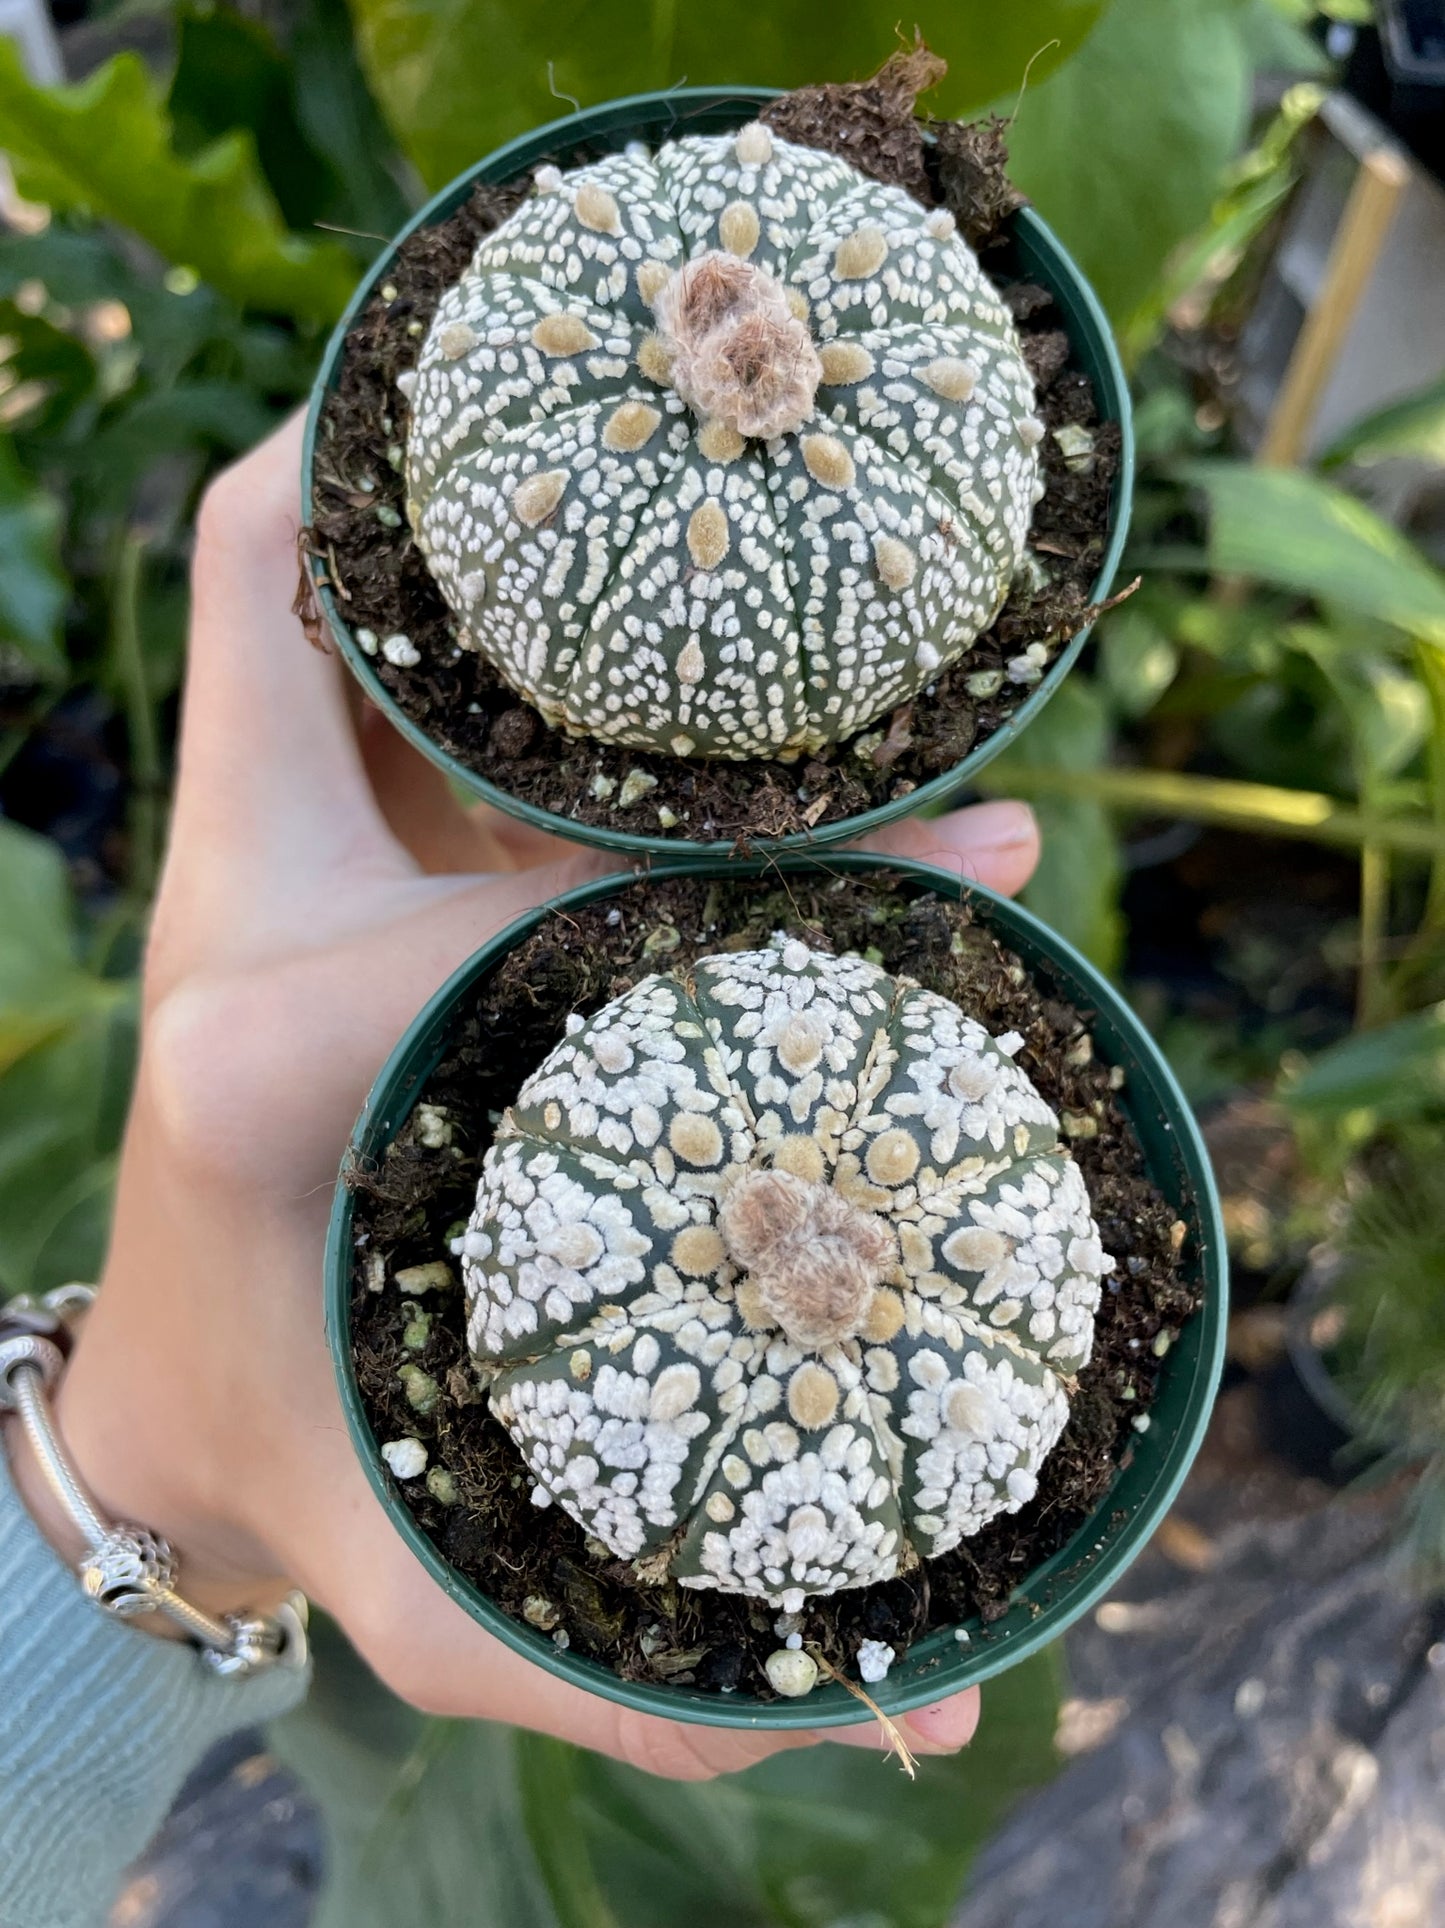 Astrophytum asterias super kabuto "Sand dollar cactus"